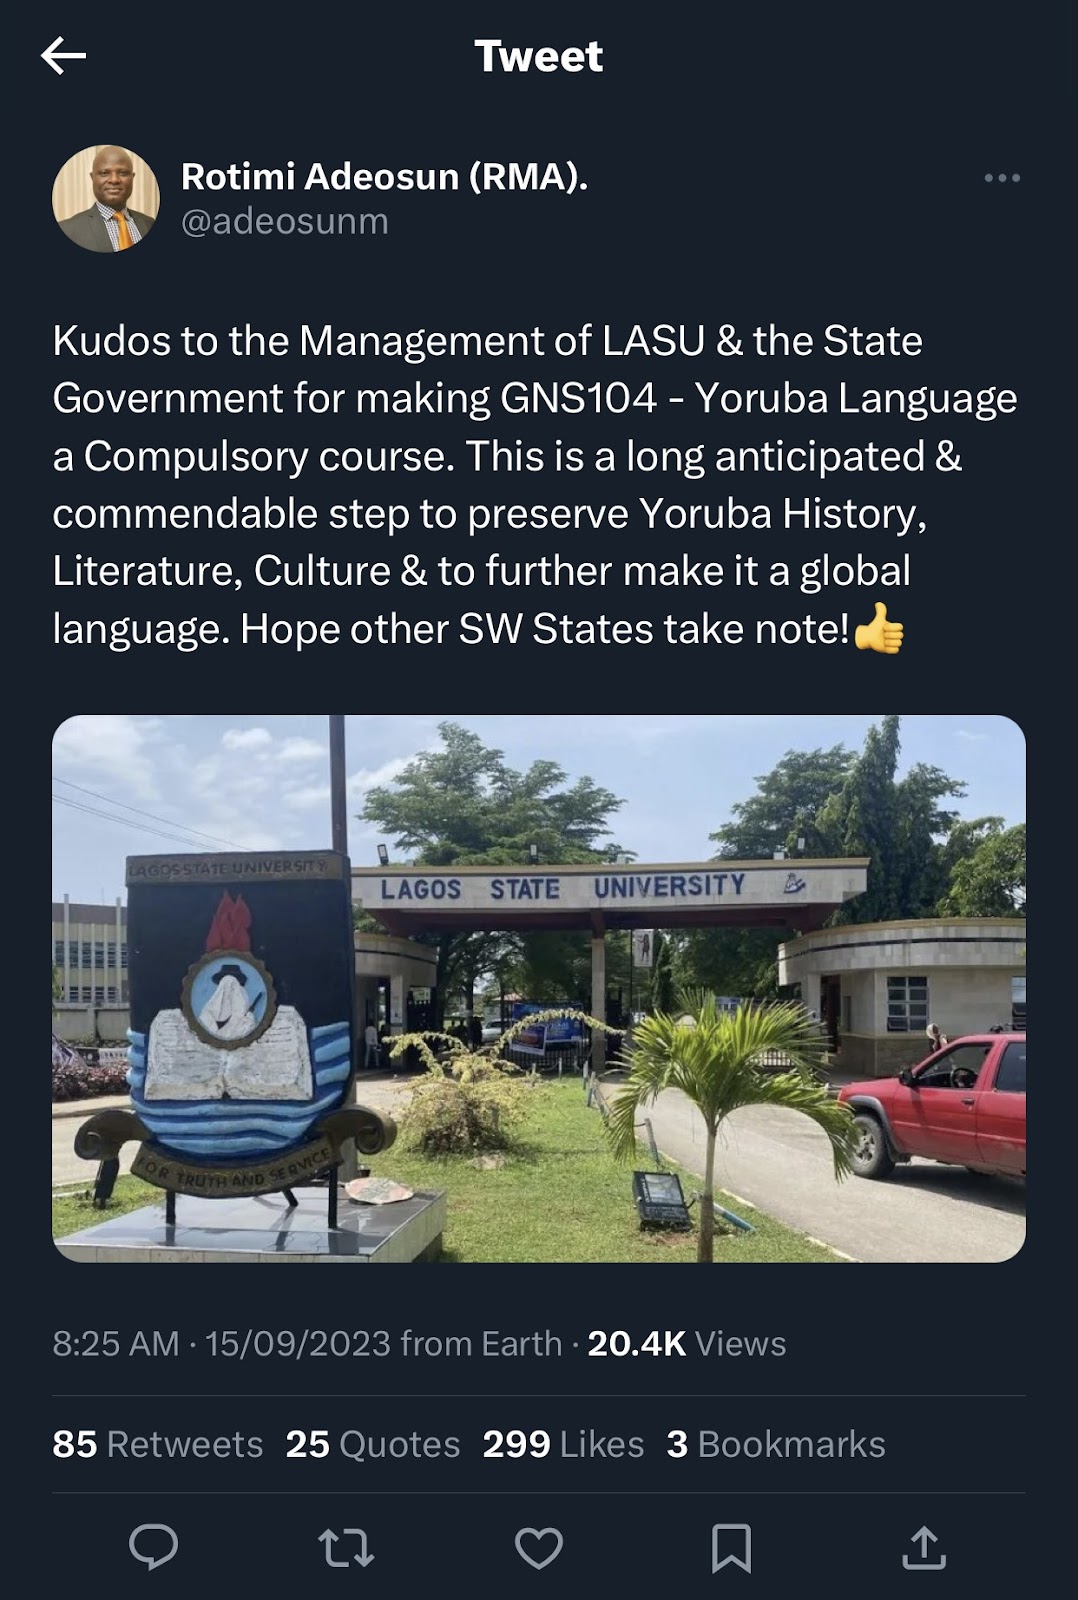 Tweet claiming LASU has made Yoruba language compulsory